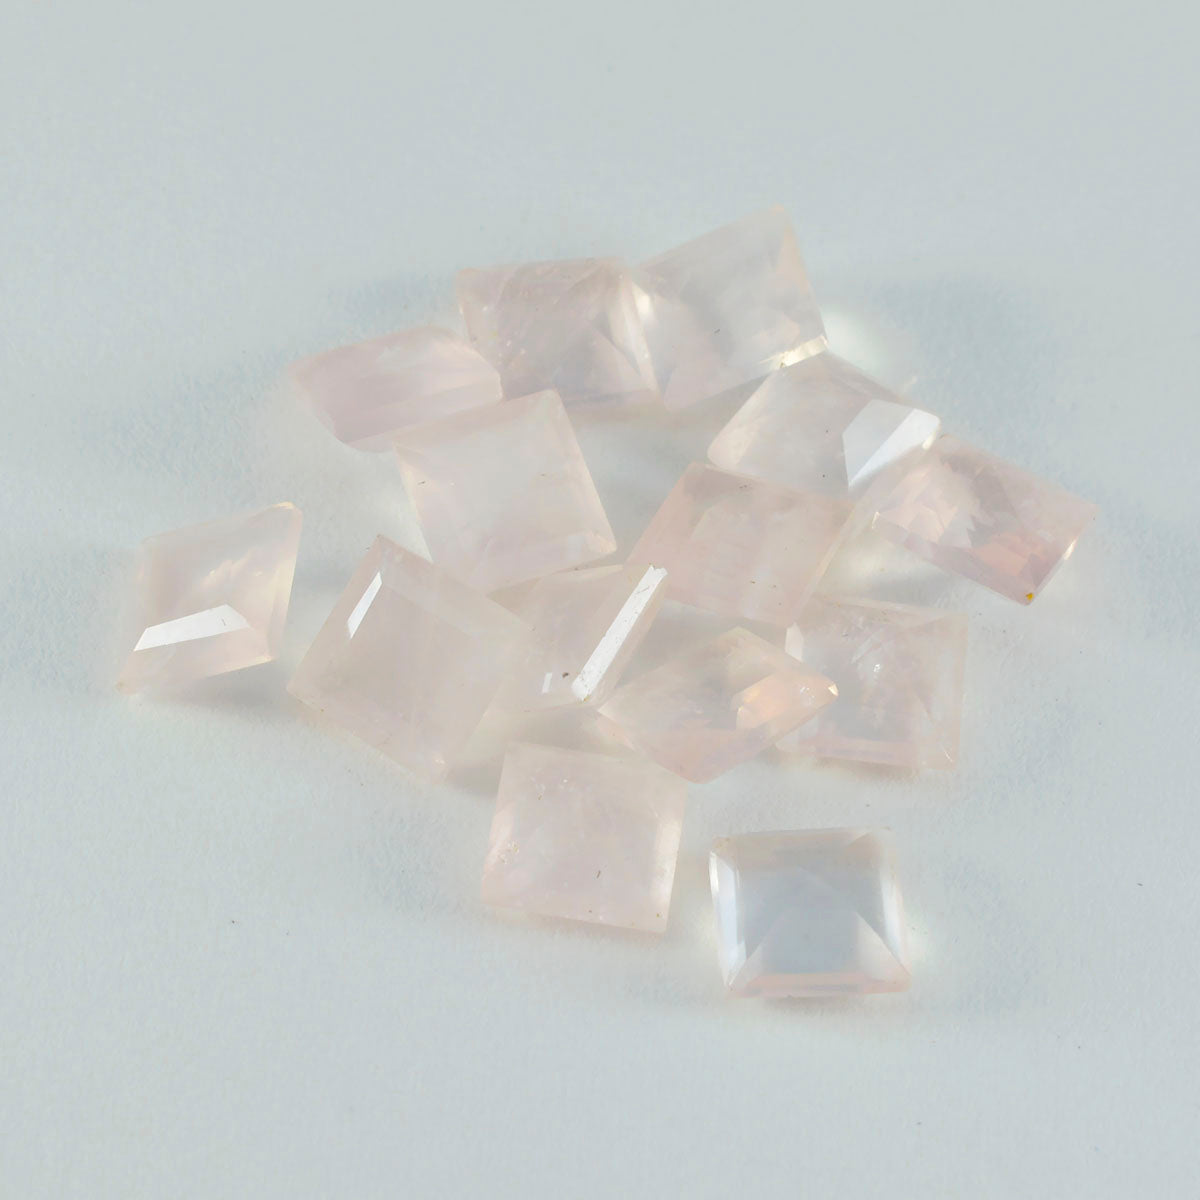 Riyogems 1PC Pink Rose Quartz Faceted 4x4 mm Square Shape pretty Quality Loose Stone